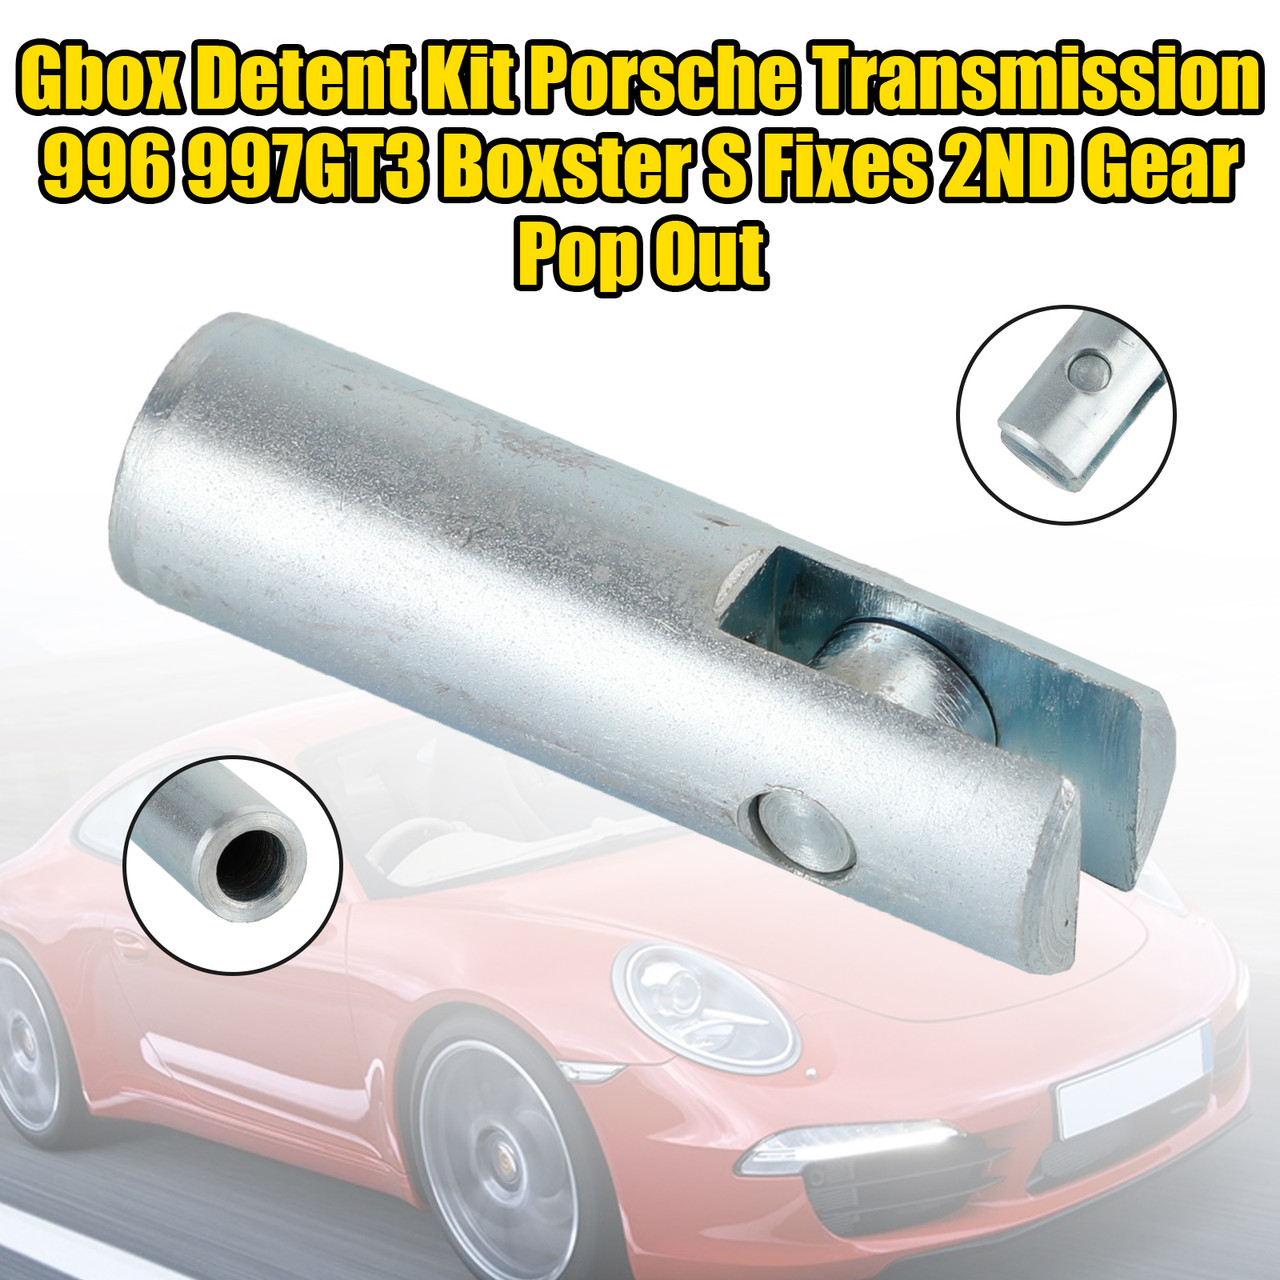 Gbox Detent Kit Porsche Transmission 996 997GT3 Boxster S Fixes 2ND Gear Pop Out